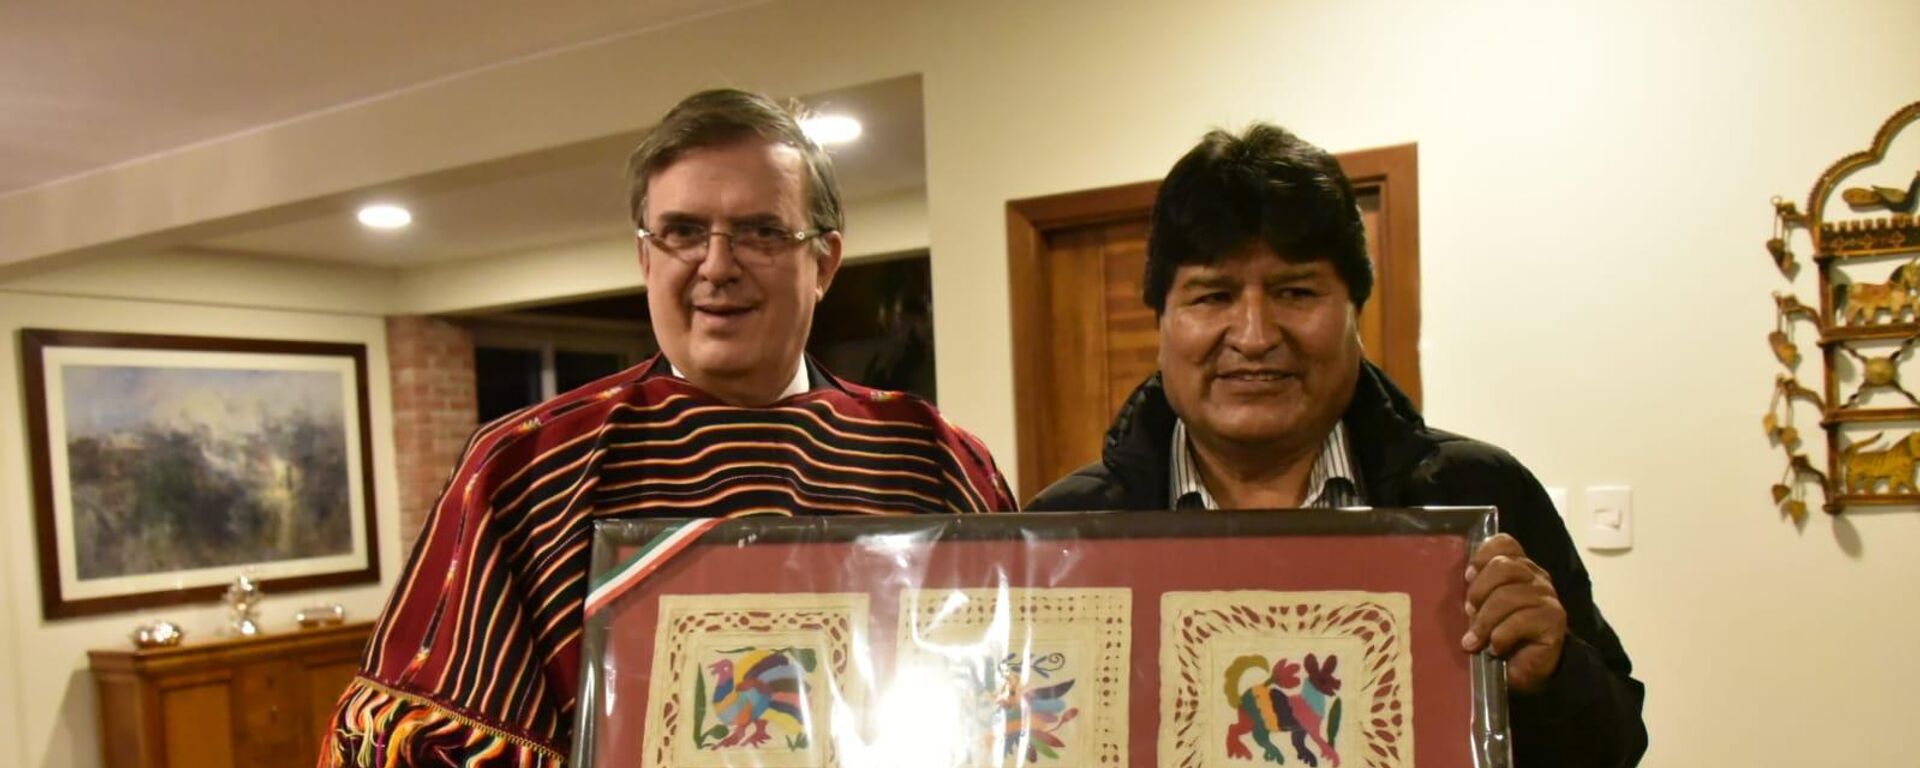 El canciller mexicano, Marcelo Ebrard, recibe un obsequio del expresidente de Bolivia, Evo Morales - Sputnik Mundo, 1920, 05.08.2022